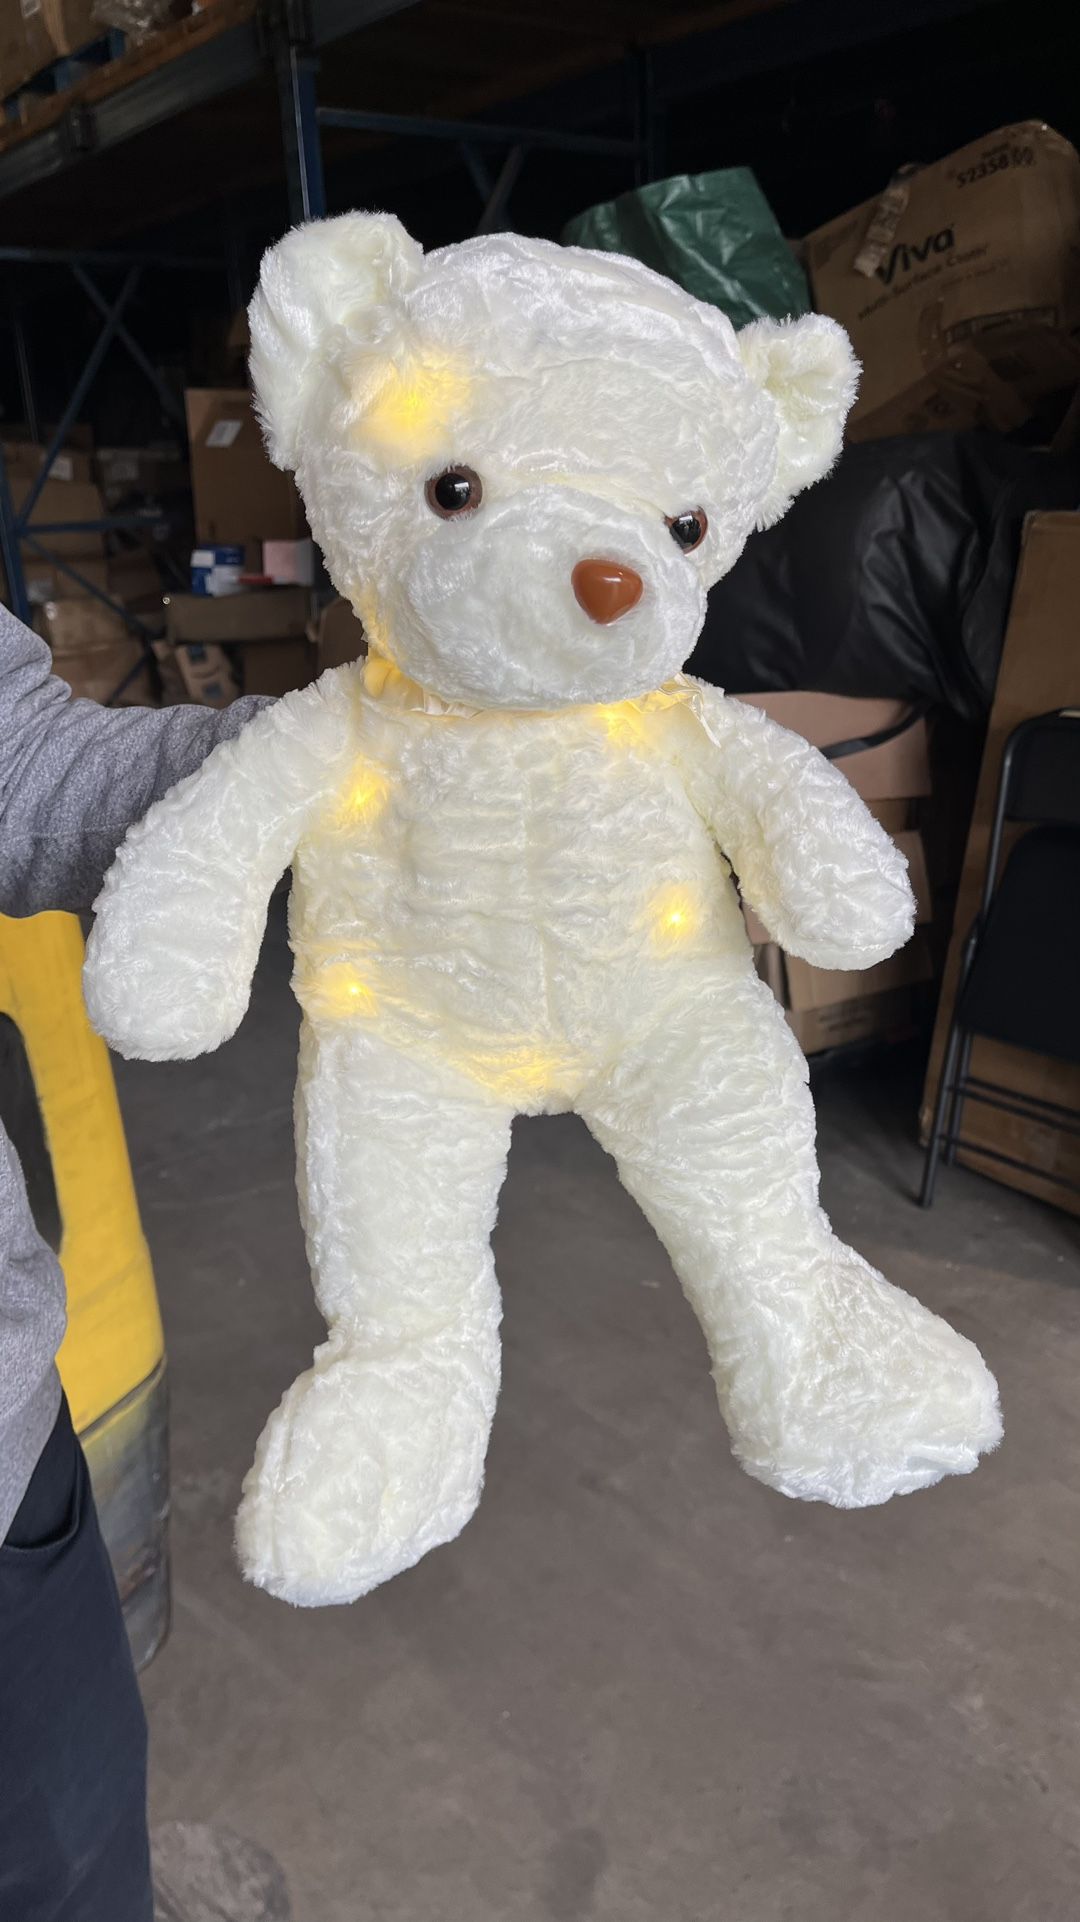 Brand new shining teddy bear